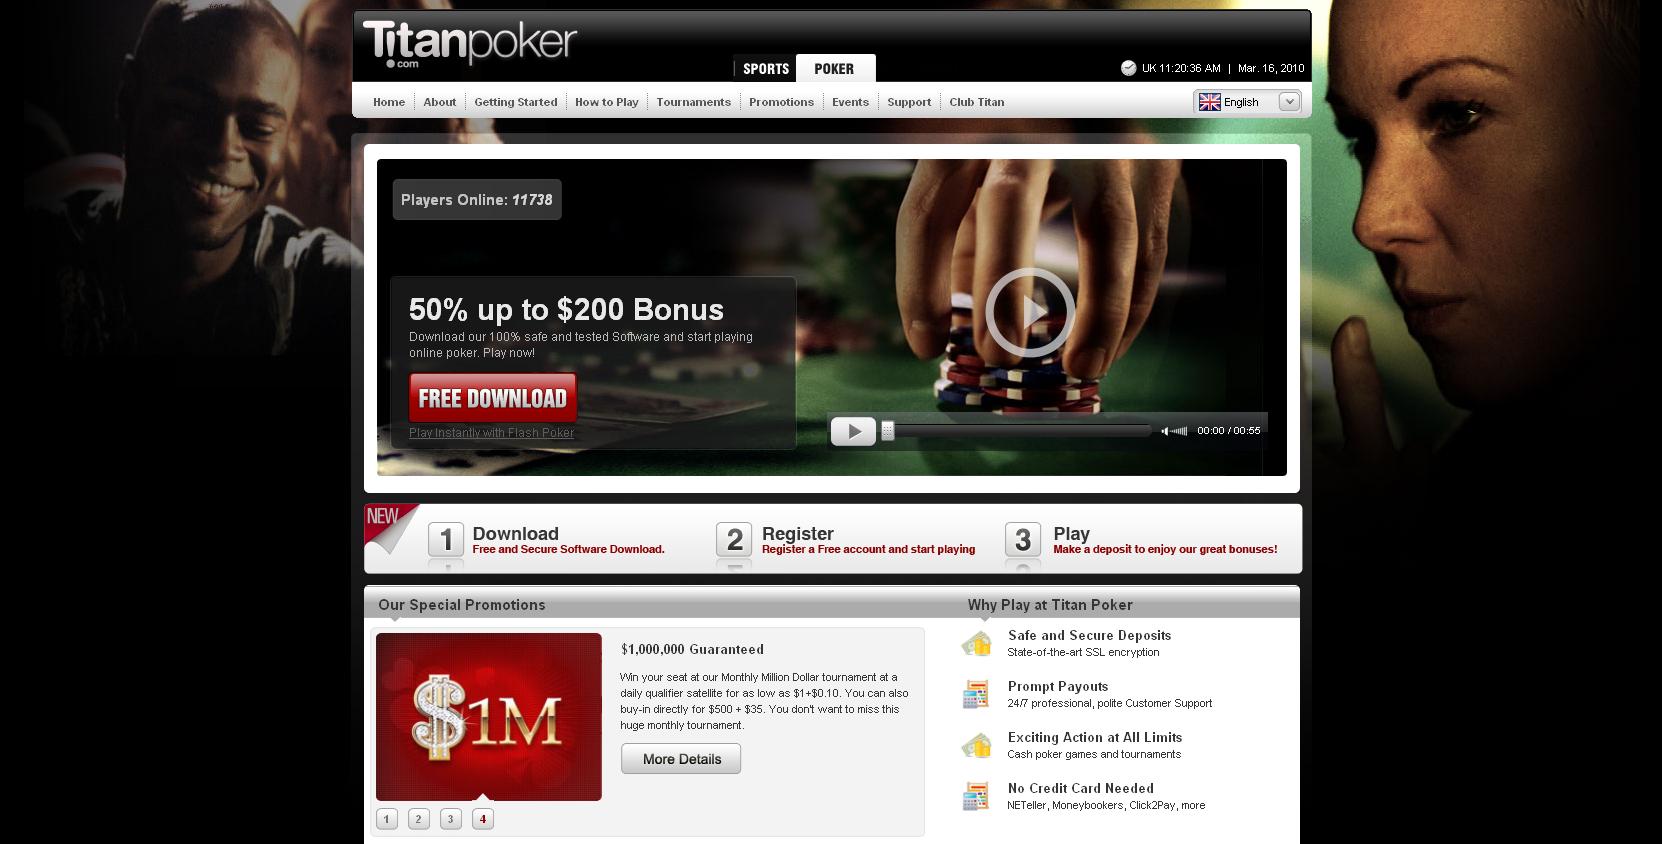 Strait spouse Actuator News: Titan Poker: New Website Layout, Updated Poker Client